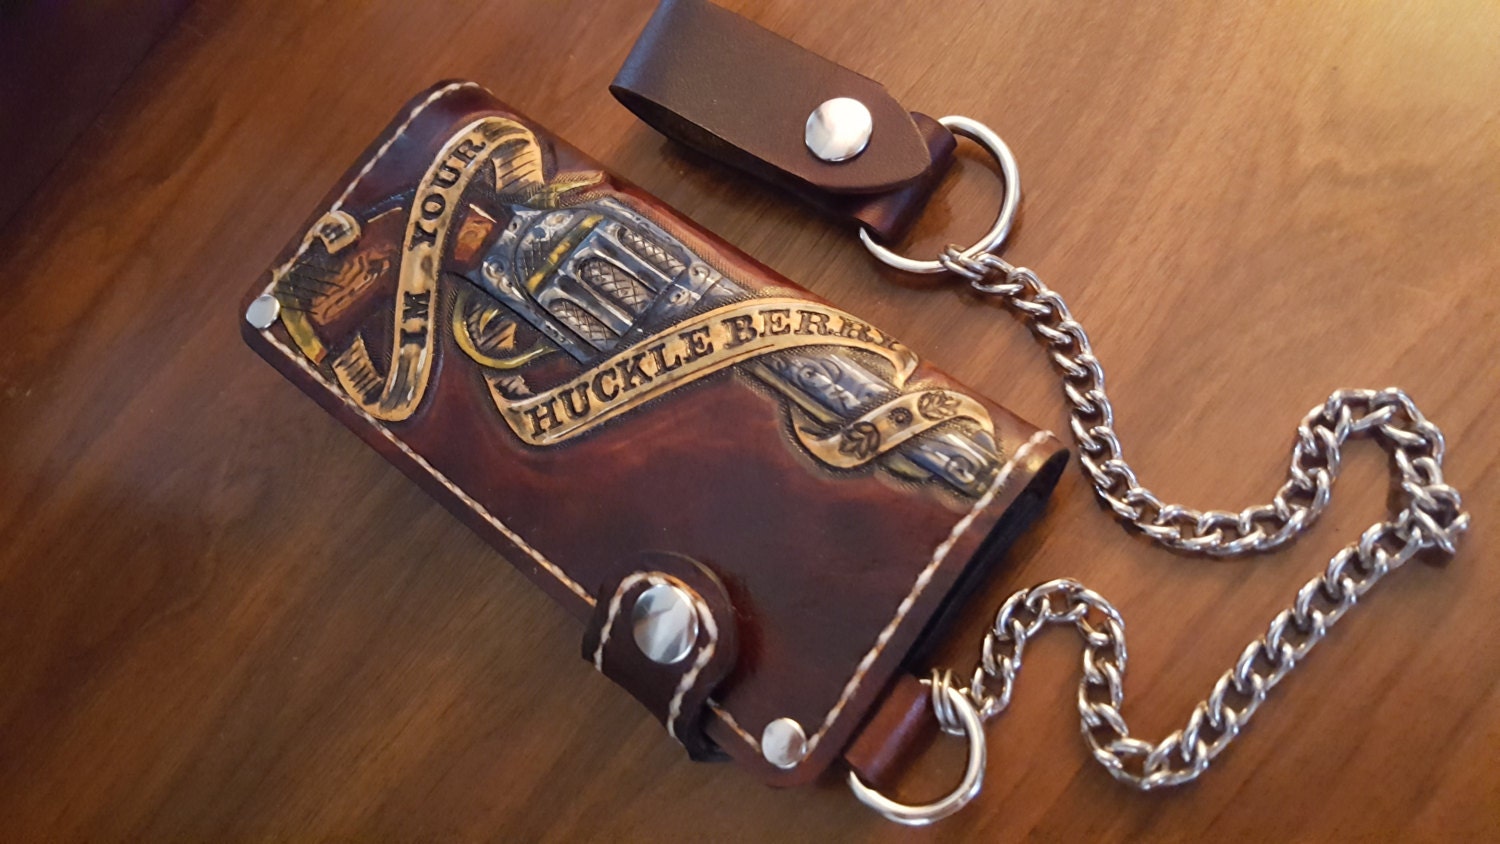 Chain Wallet Im your huckleberry Biker Wallet leather